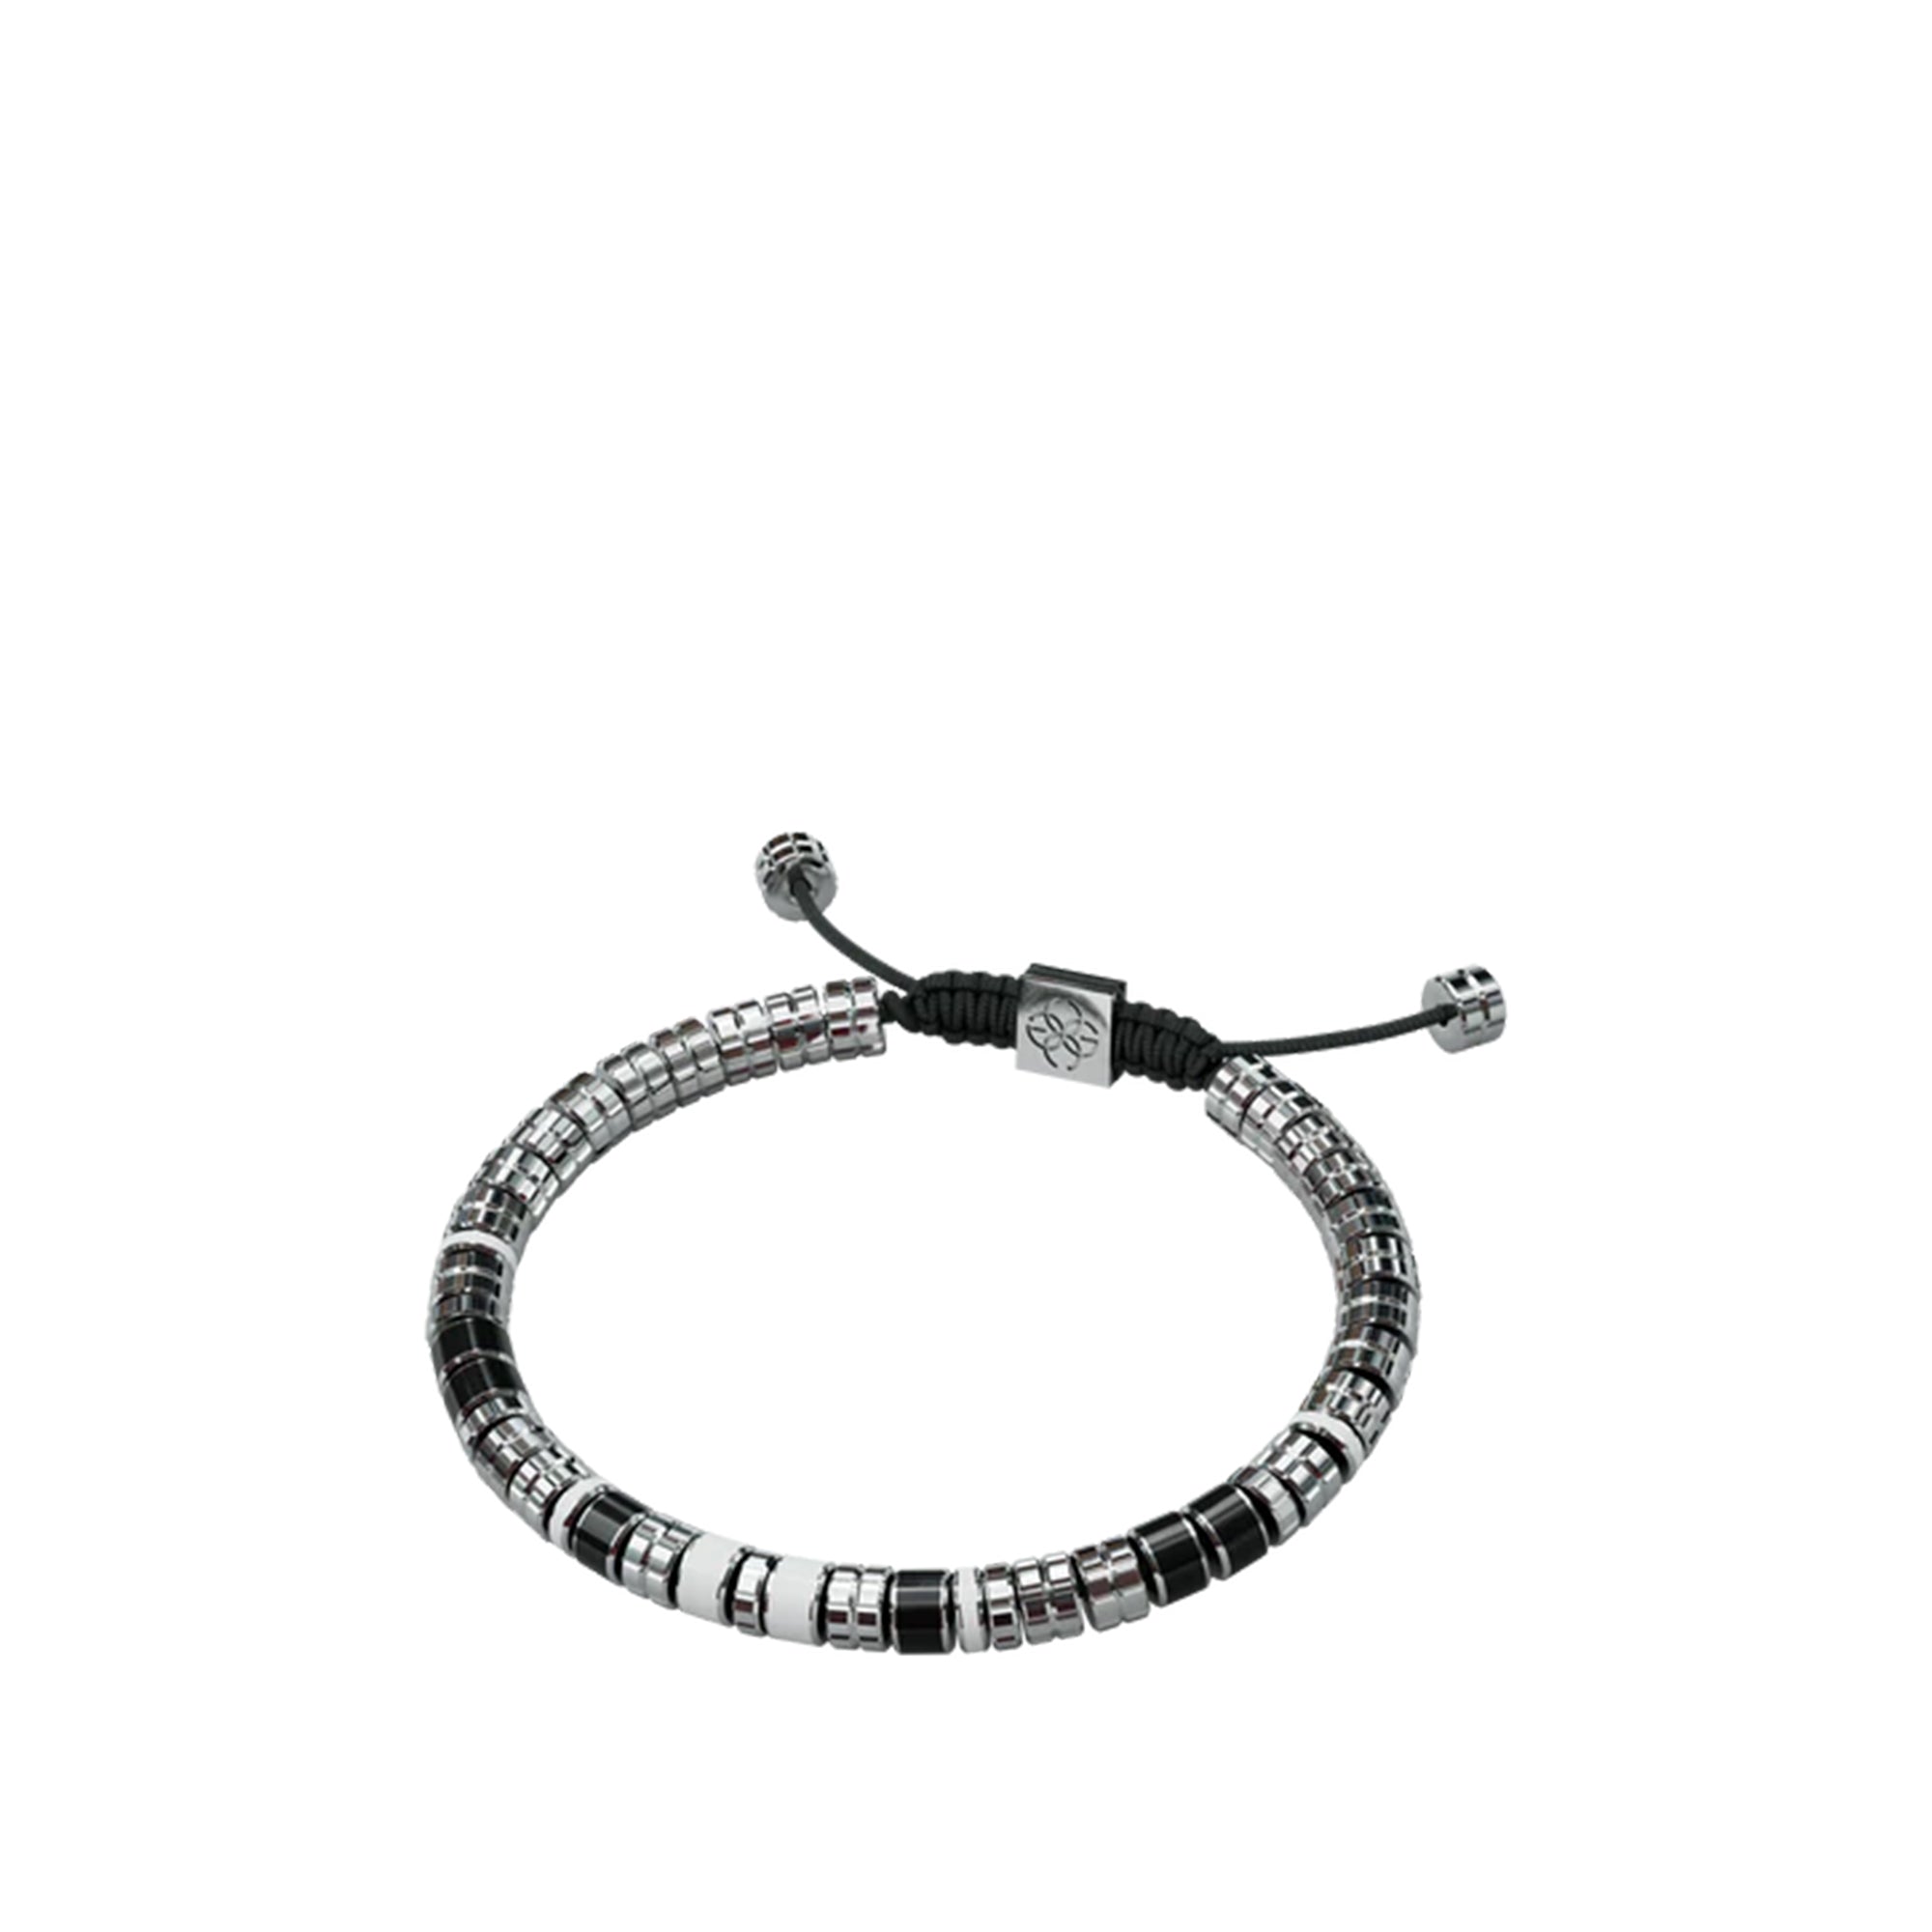 Golden Concept Bracelet Silver/White/Black 19cm/Large